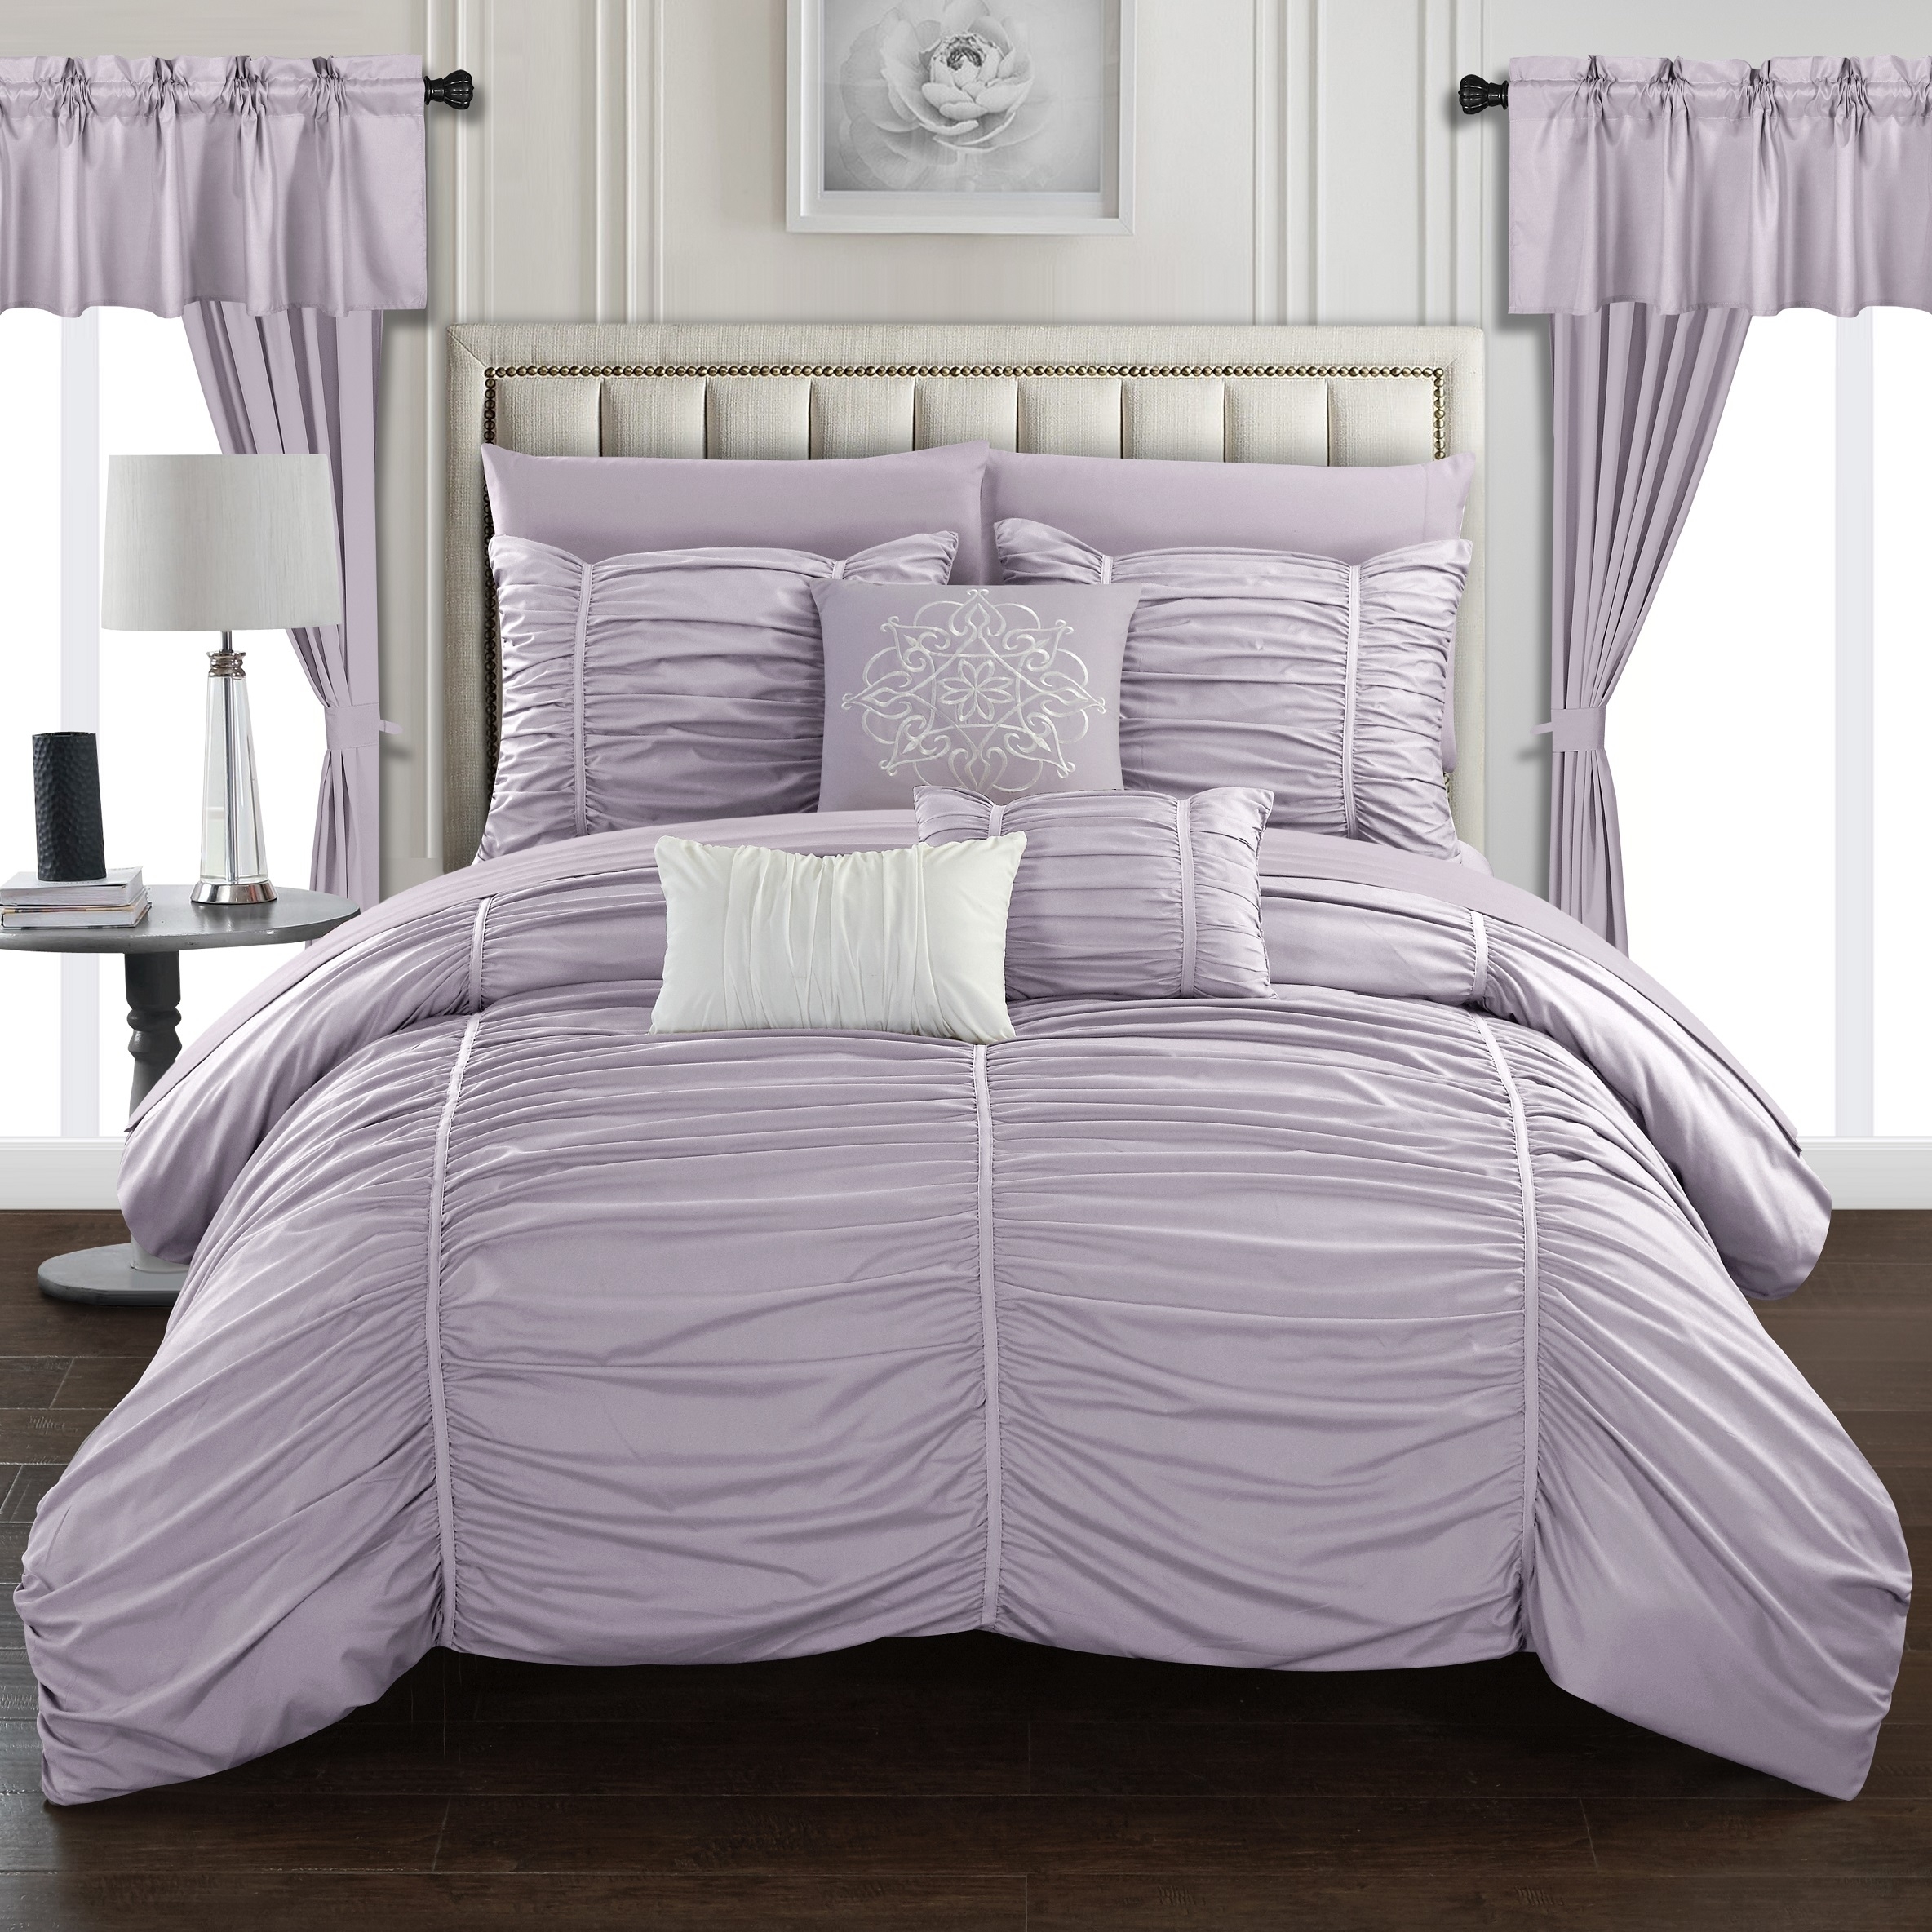 Gruyeres 20 Piece Comforter Set Ruffled Ruched Designer Bedding - White, King